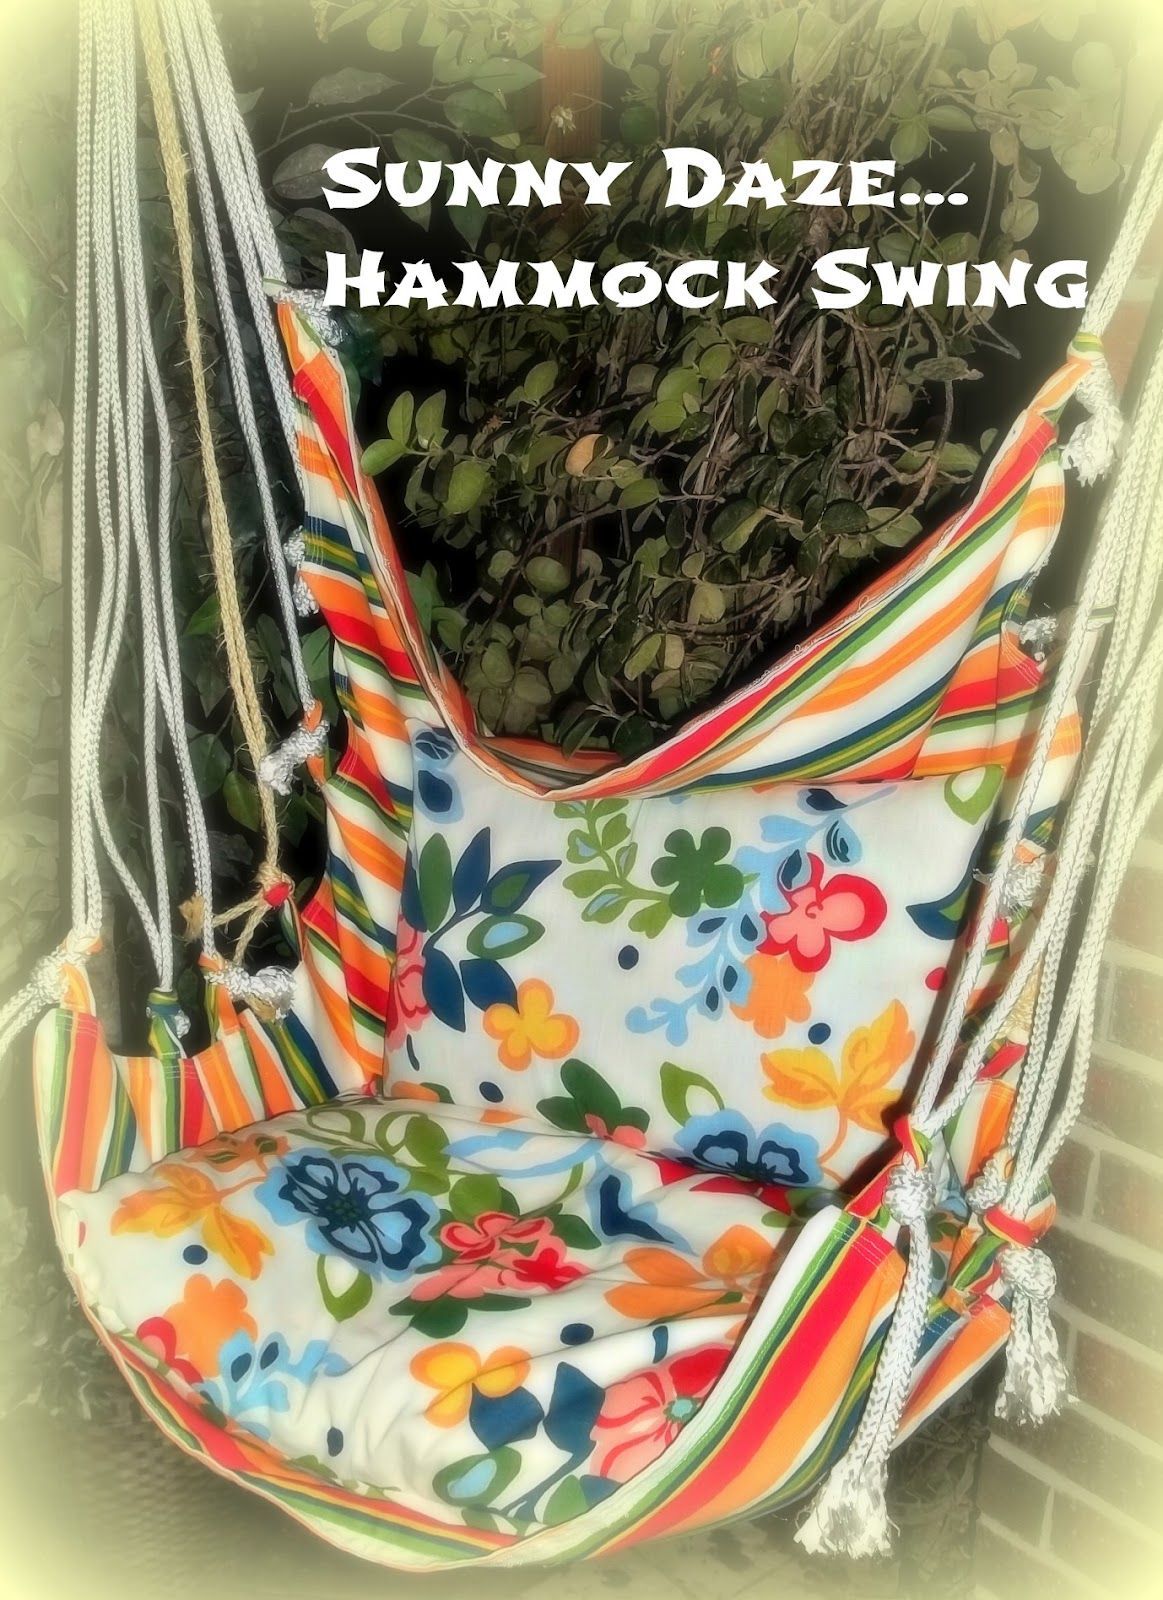 Finally, a DIY hammock swing tutorial! Because the hammock swings I like (Magnol